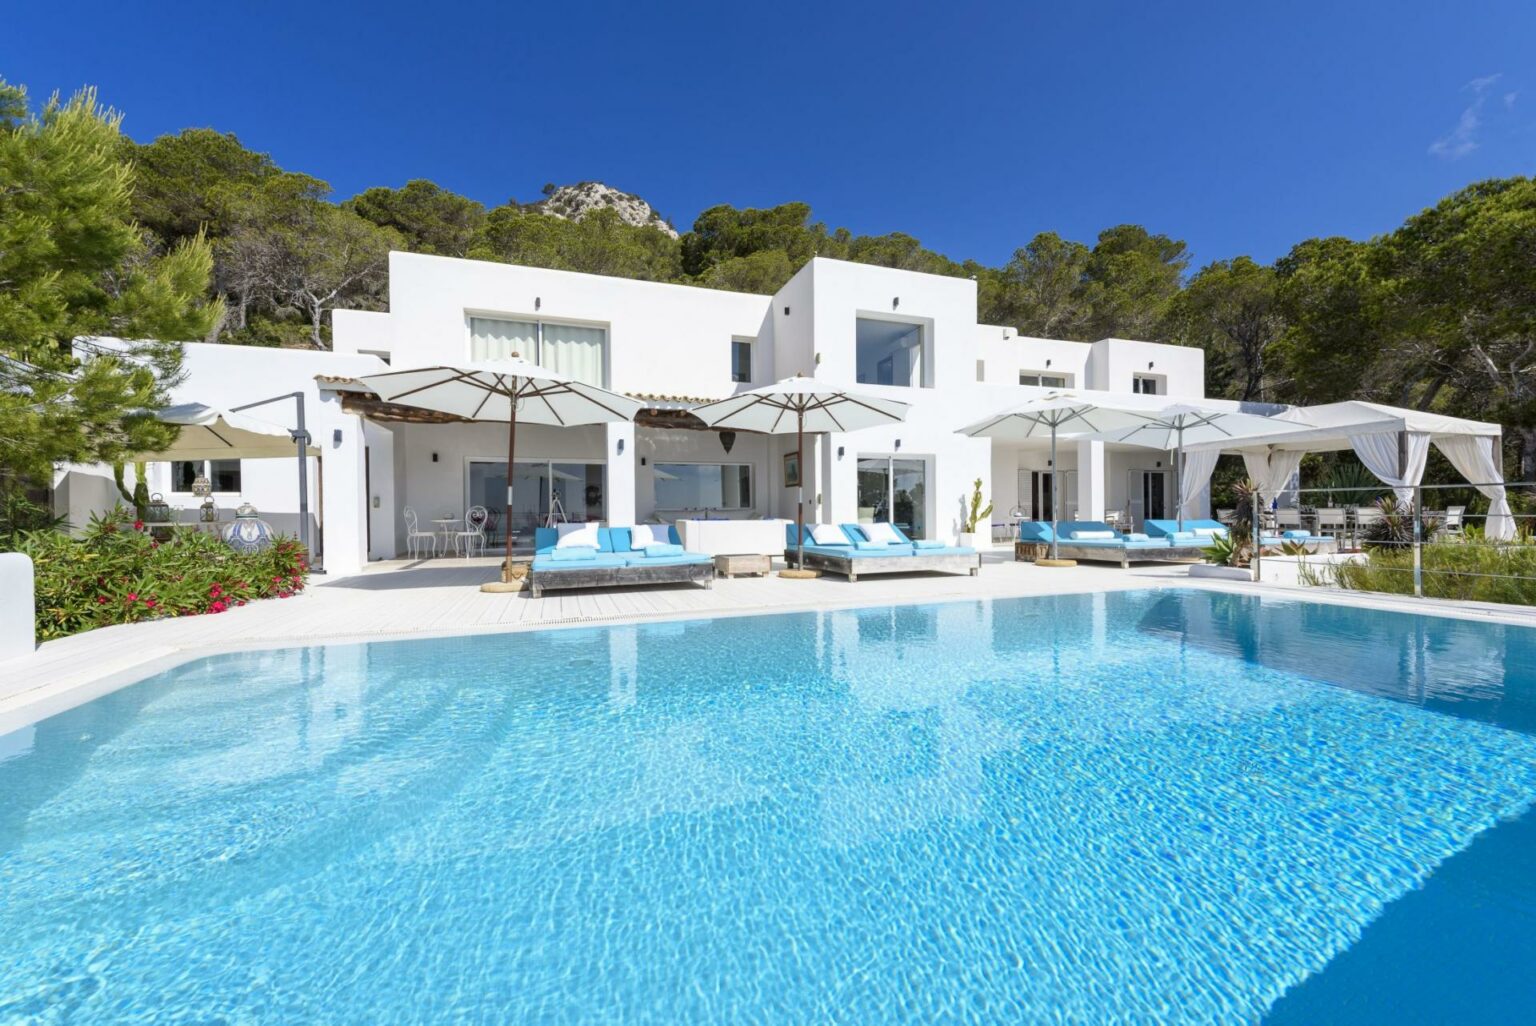 Villa Romero in Ibiza, outdoor pool